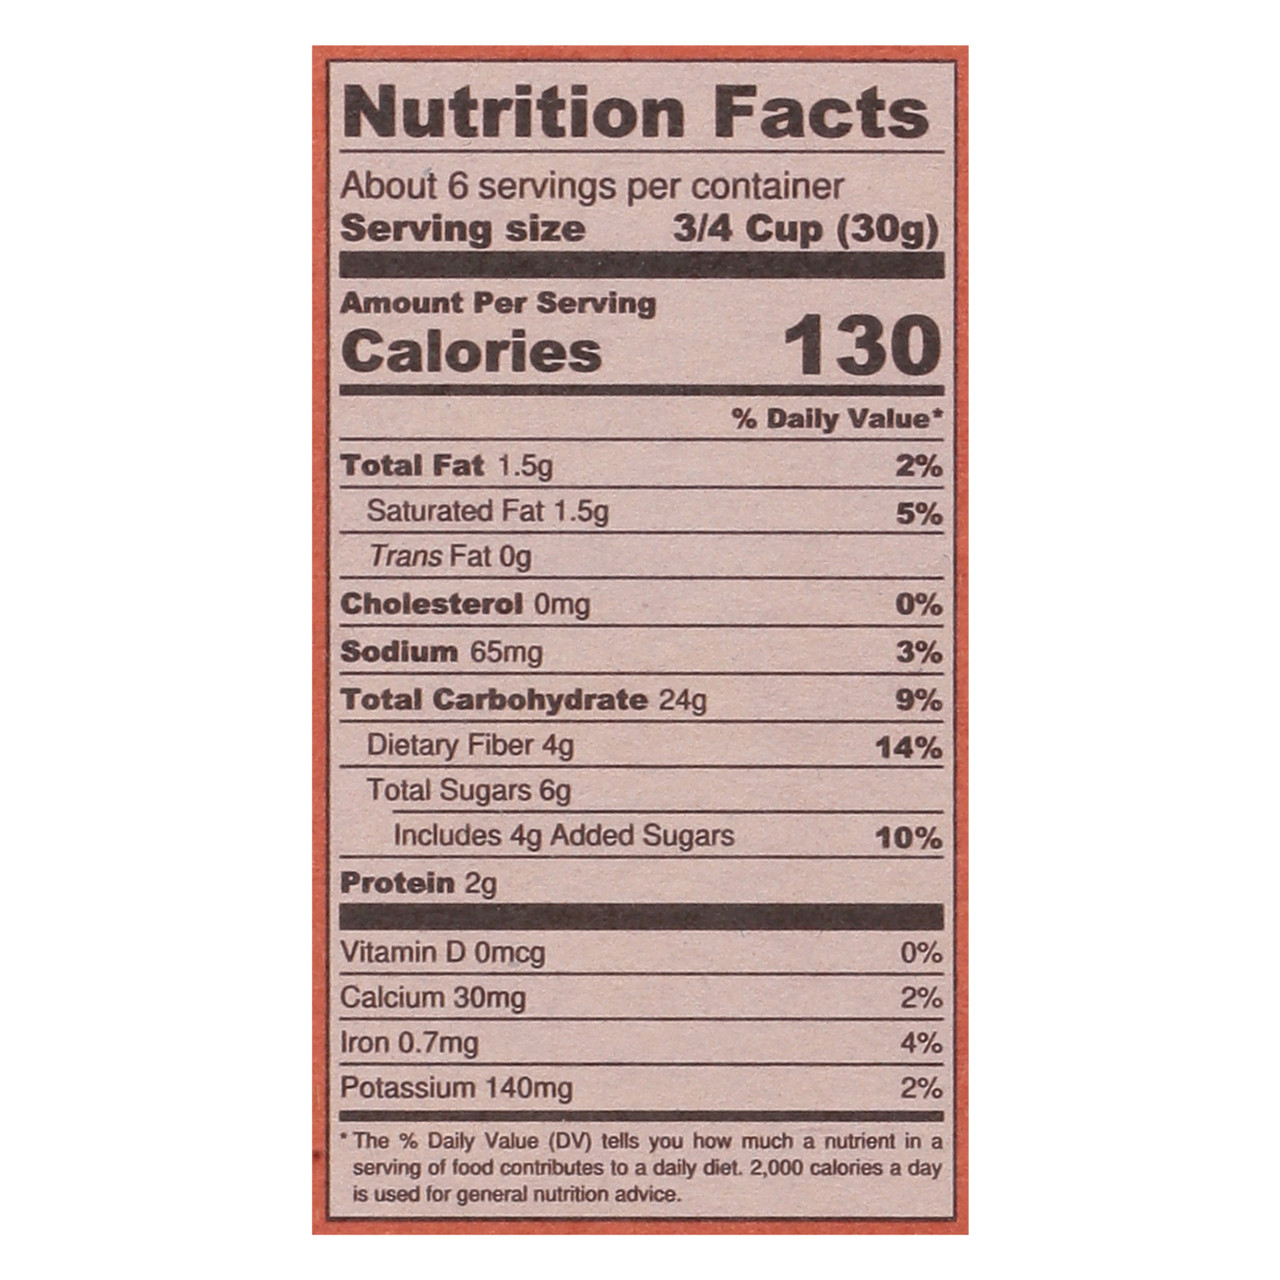 Three Wishes - Cereal Cinnamon Gluten Free - Case Of 6-8.6 Oz